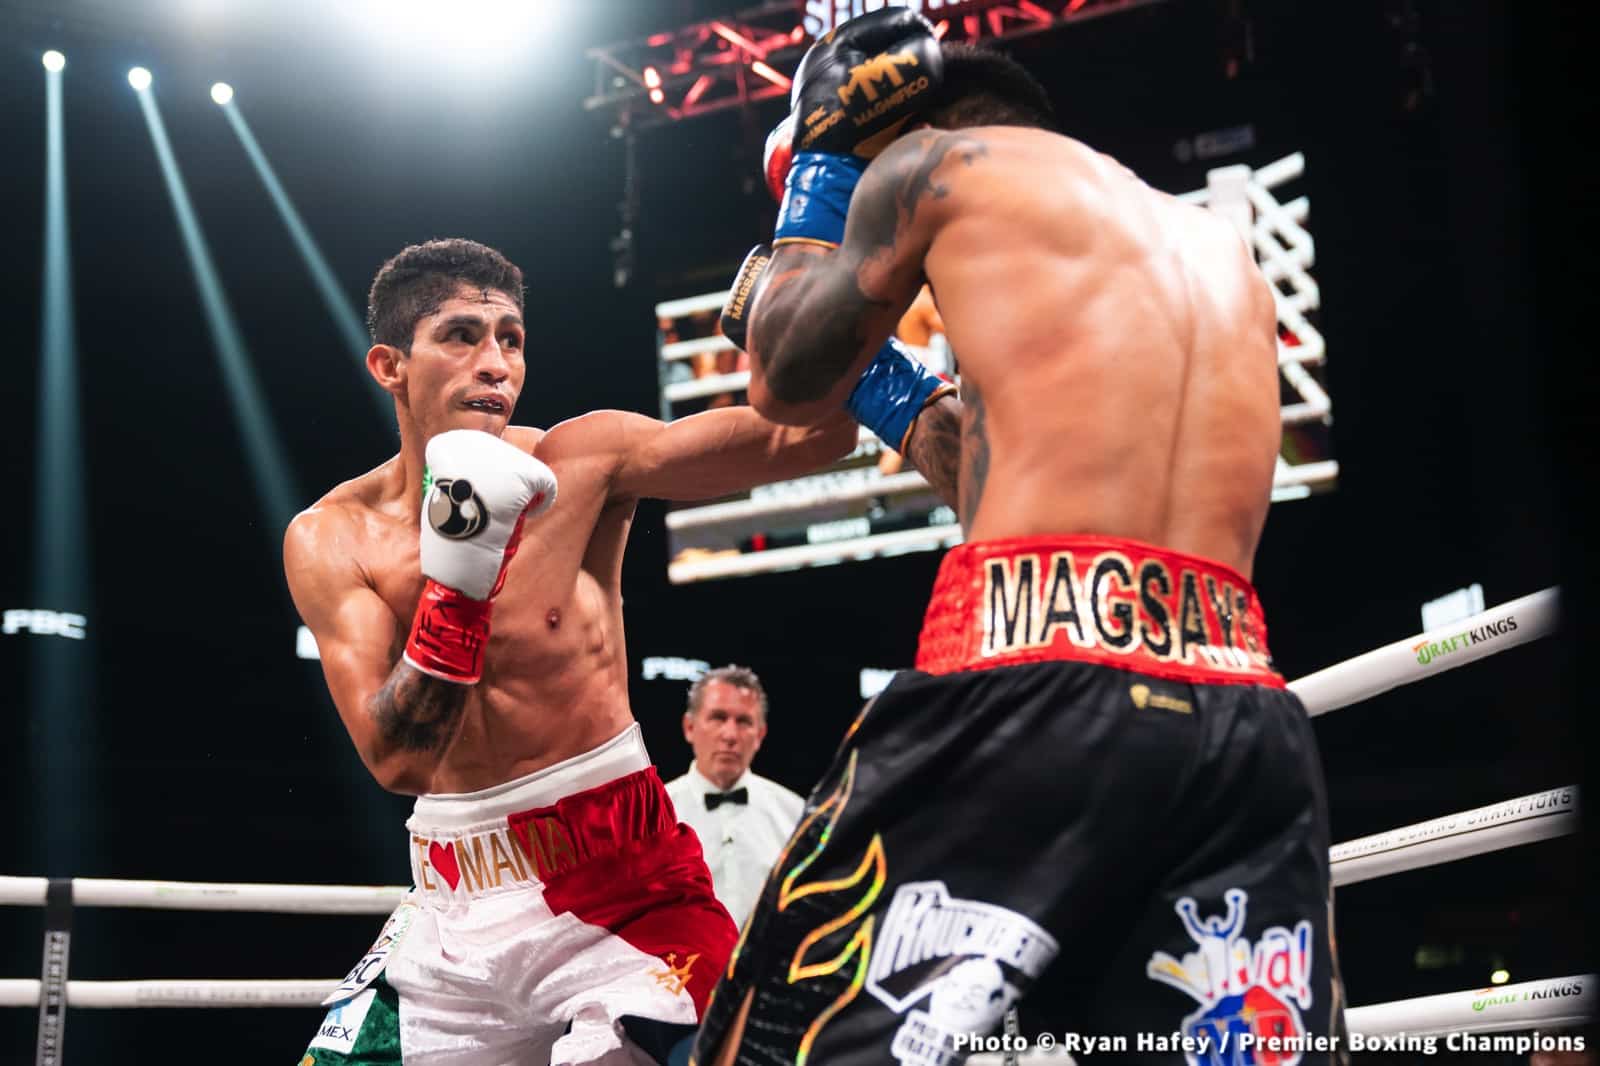 Magsayo vs. Vargas - LIVE results from Alamodome in San Antonio